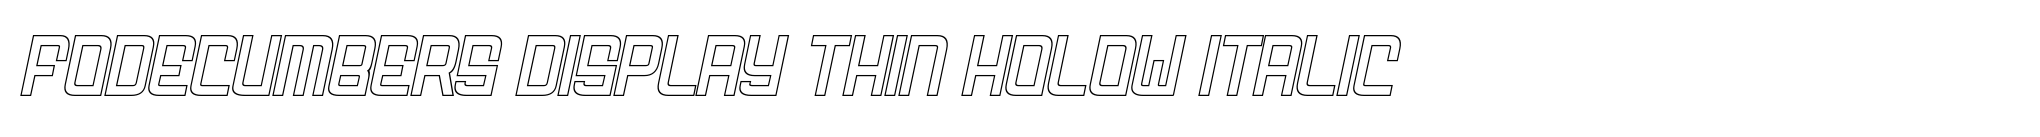 Fodecumbers Display Thin Holow Italic image